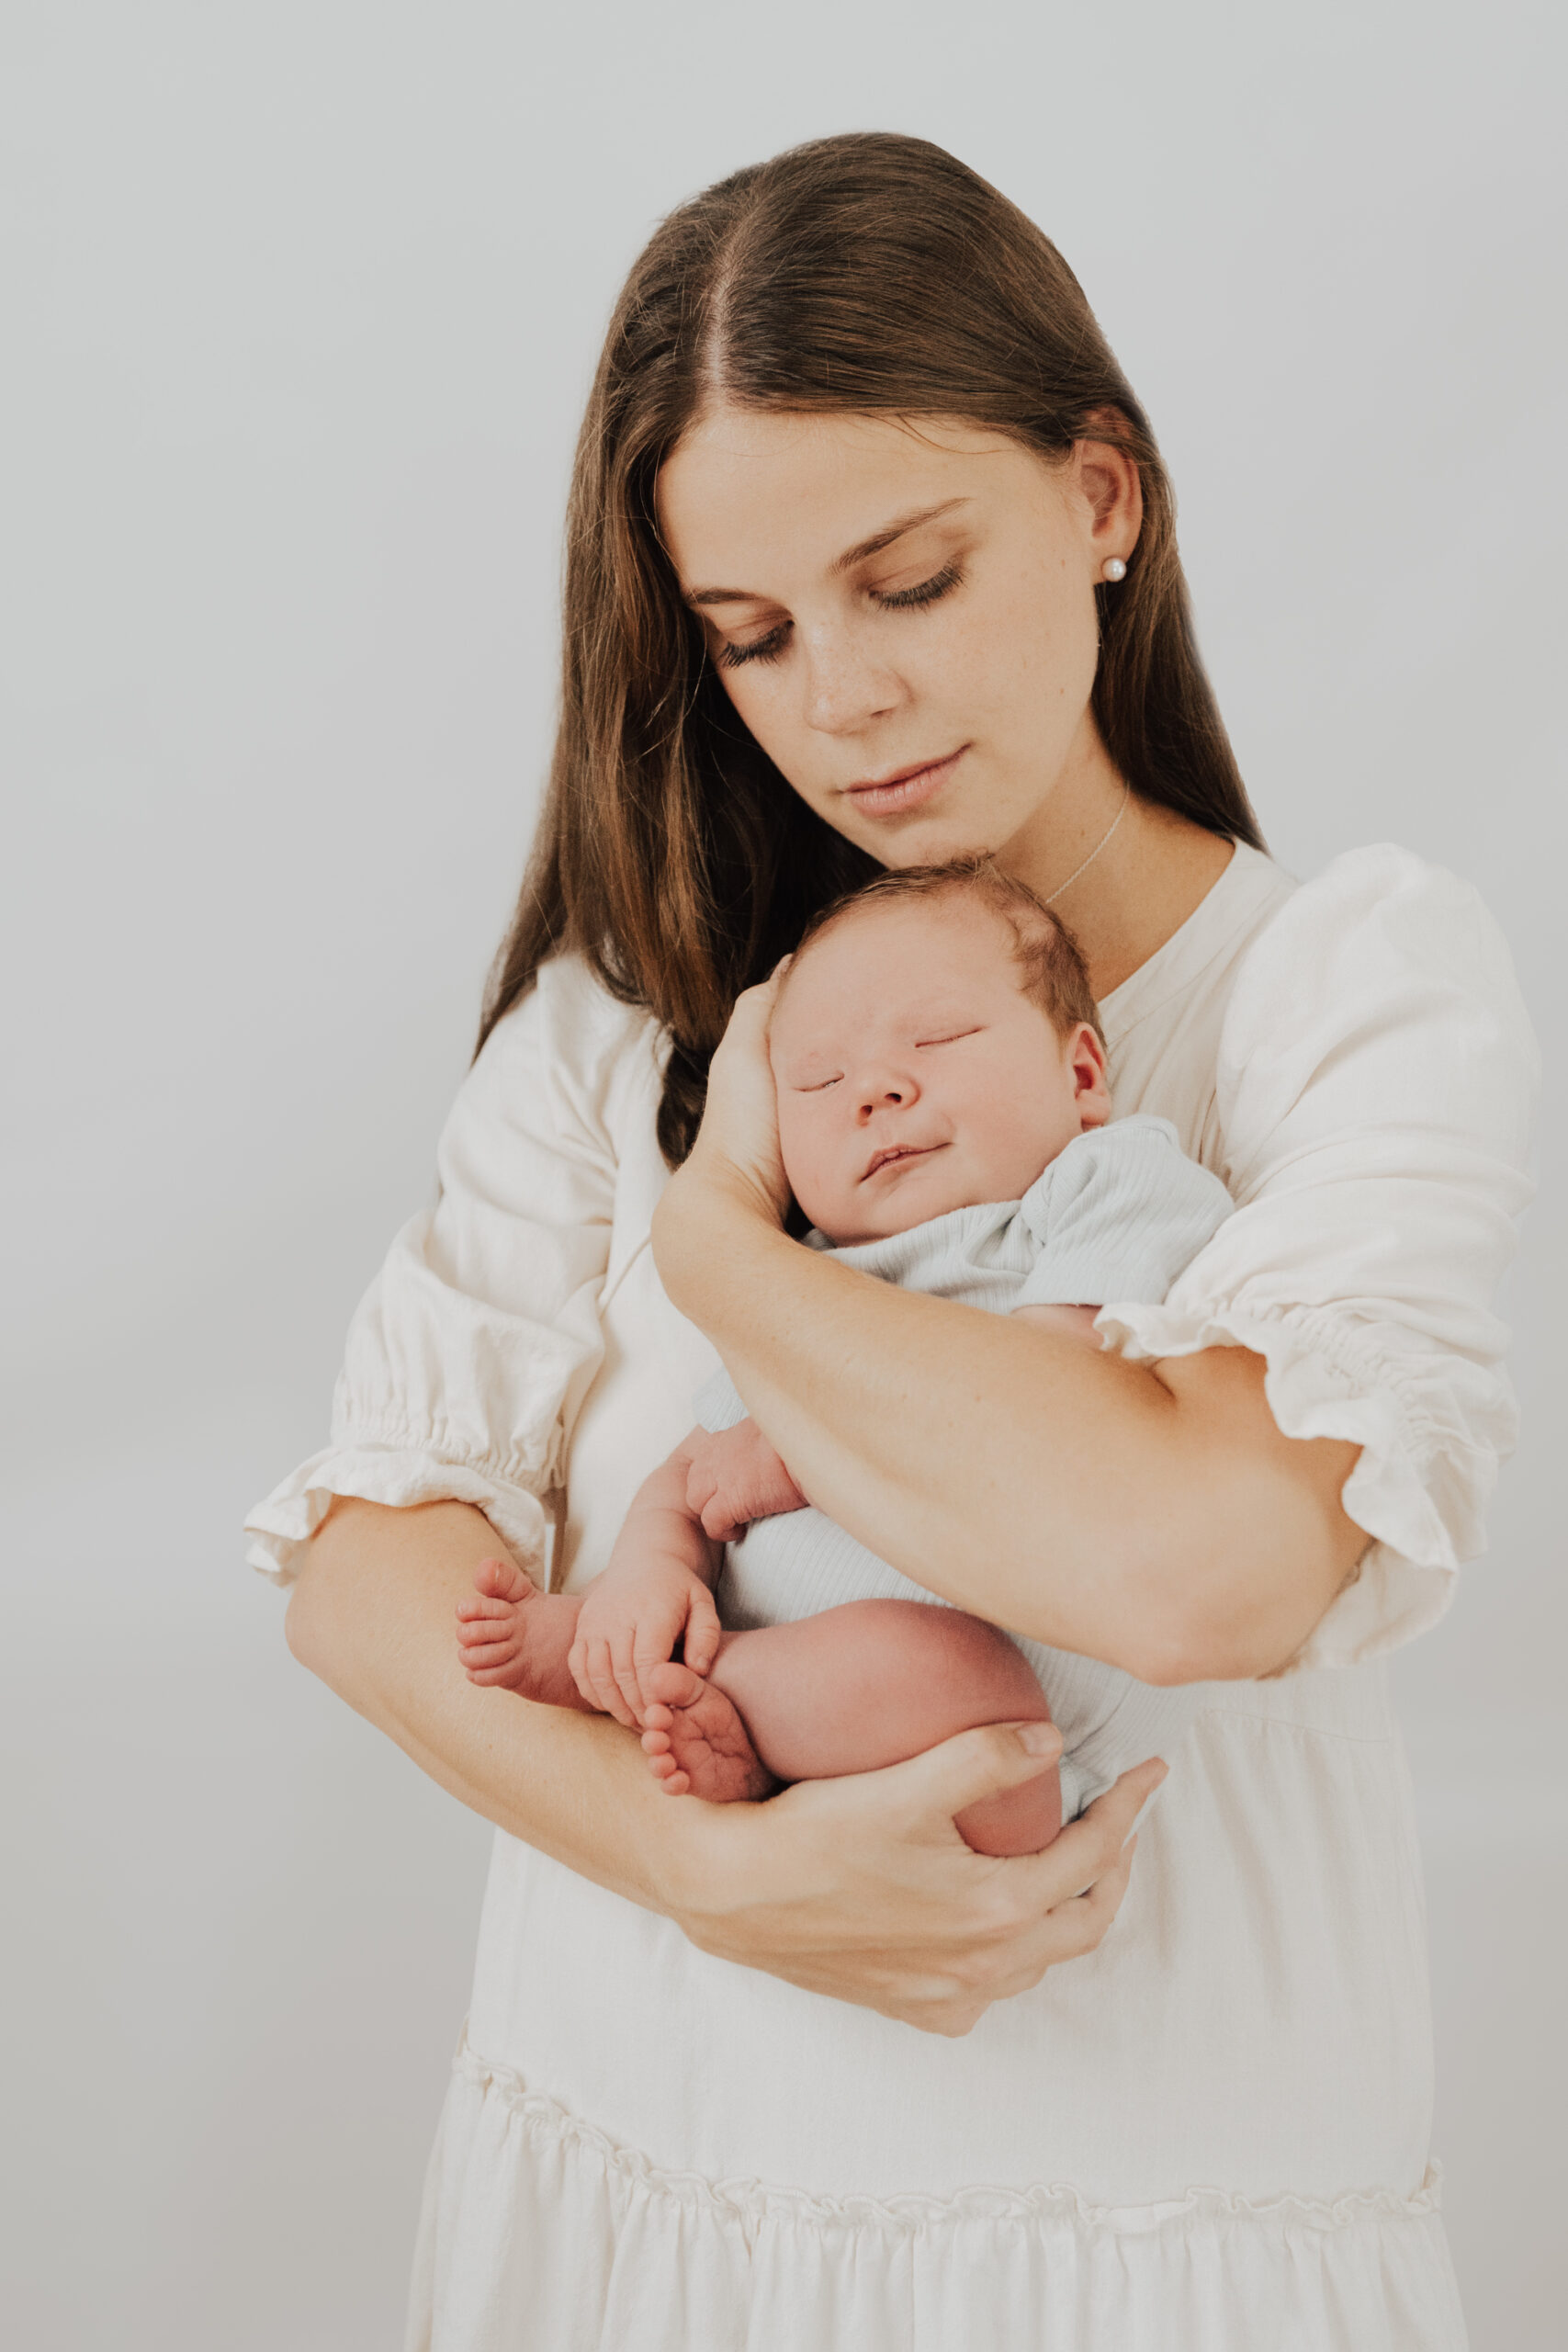 newborn baby being held close by mum in white dress - newborn photography by Jamie Simmons